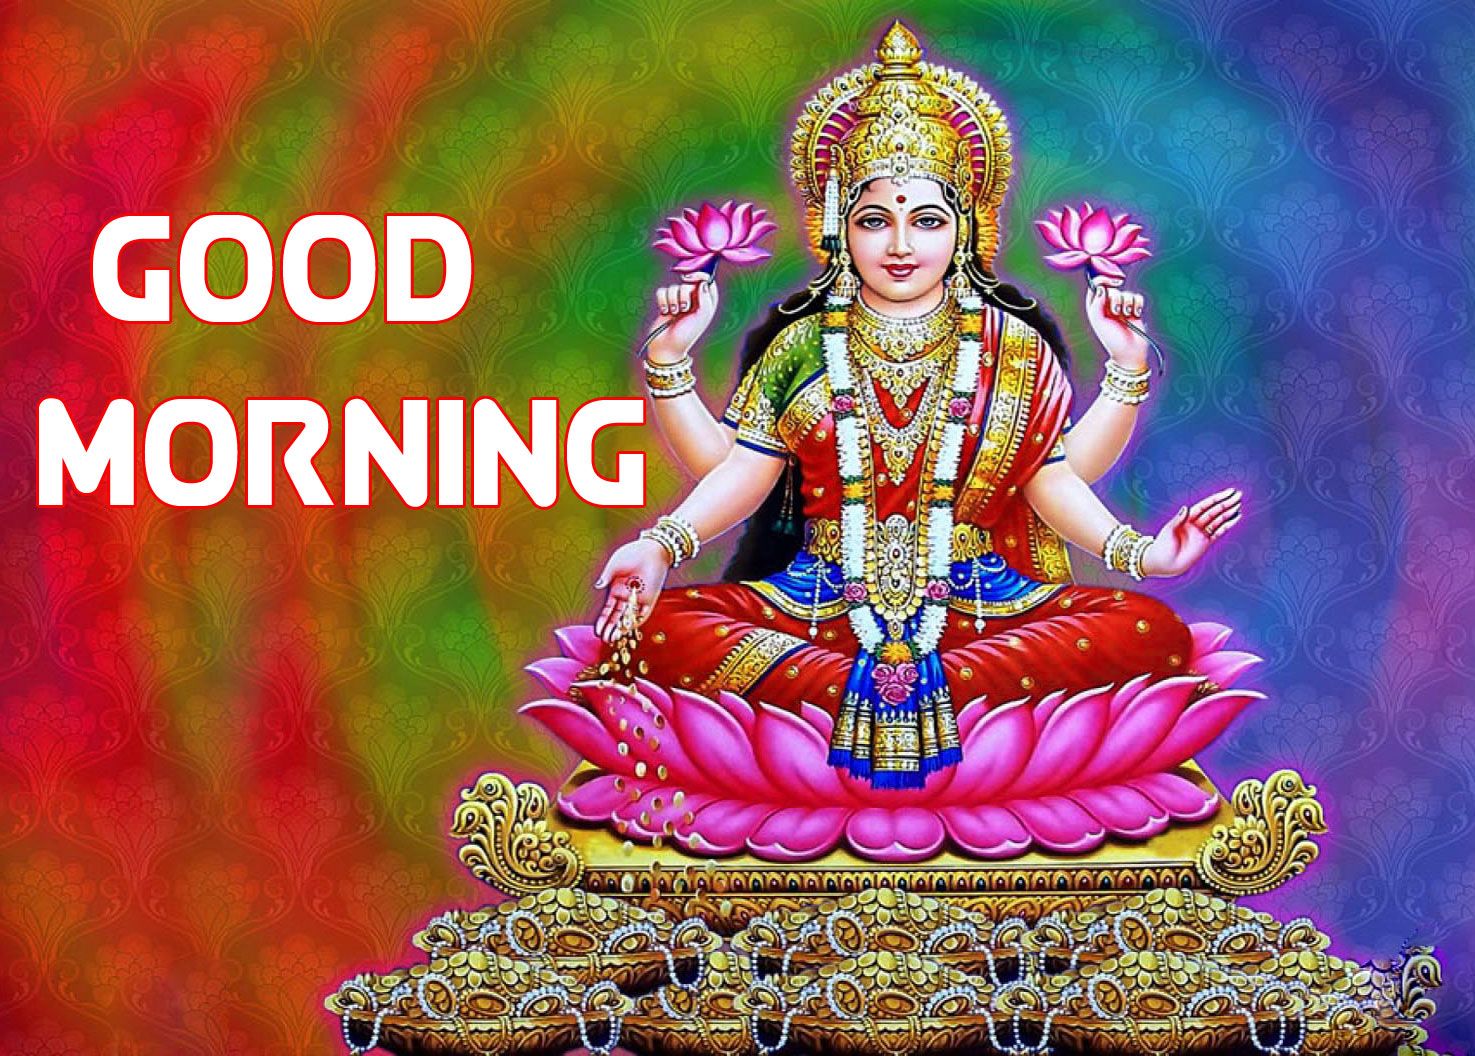 God Good Morning Image Wallpaper Pics HD Download